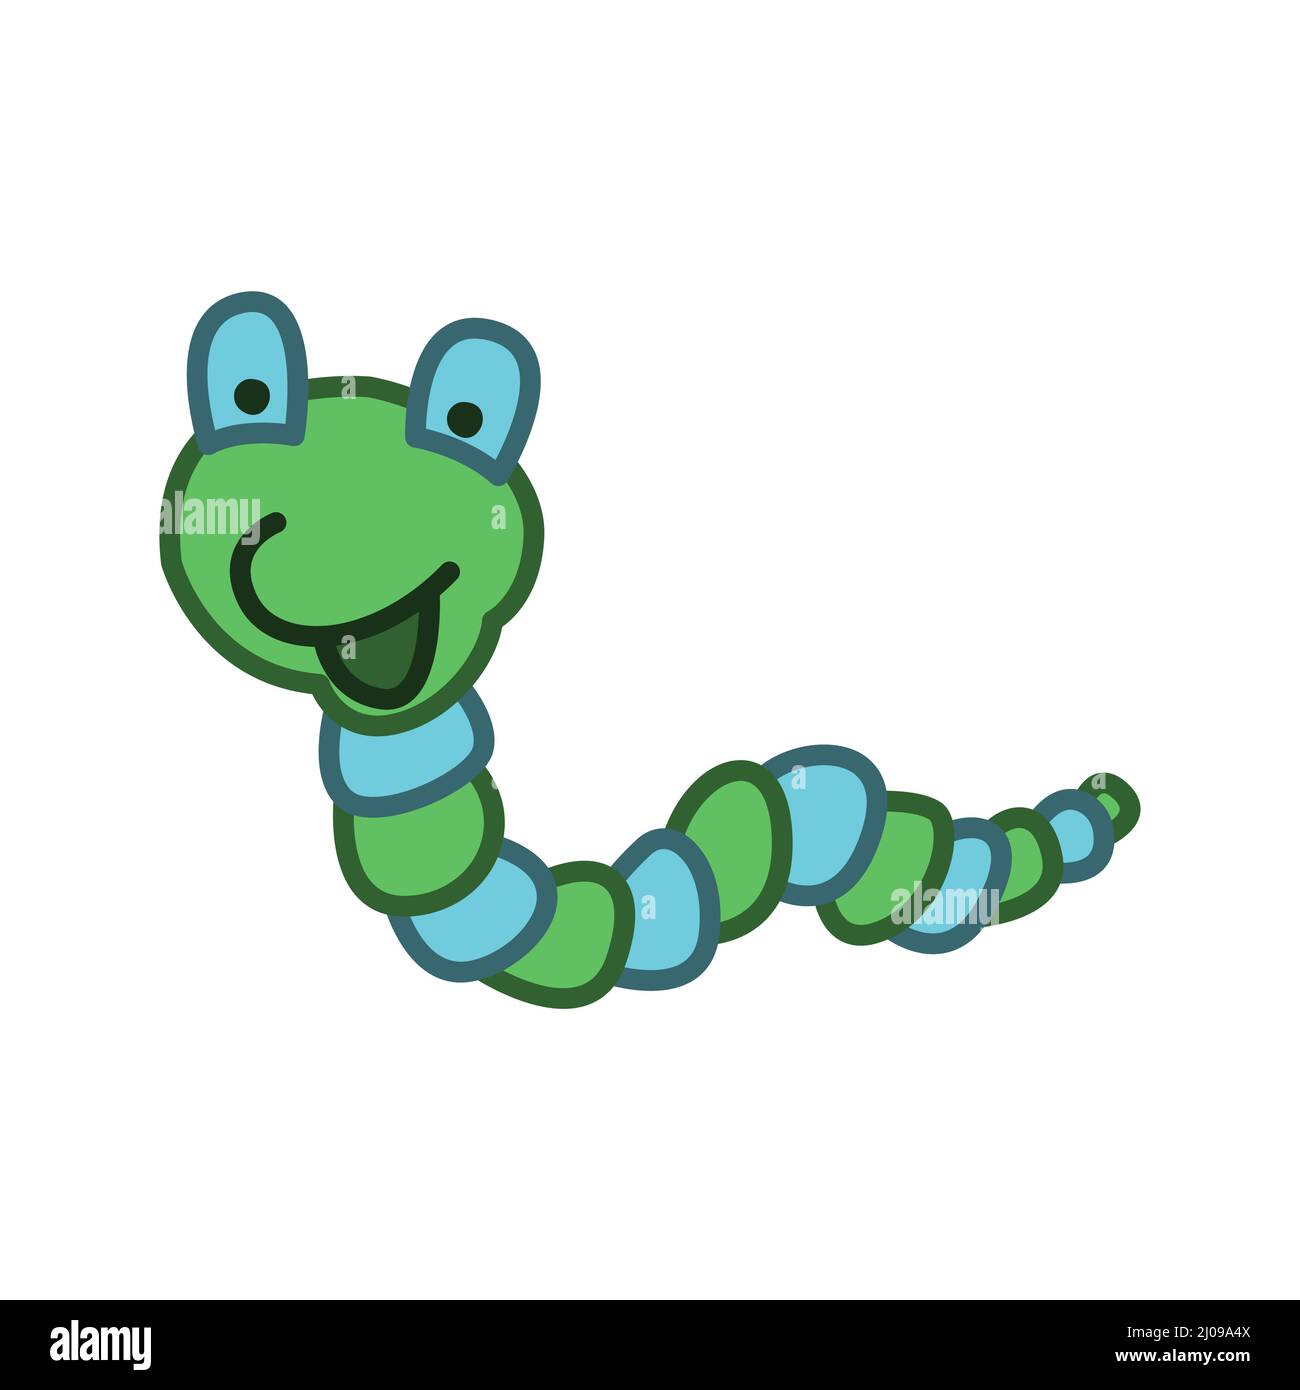 clip art of worm with cartoon design,vector illustration Stock